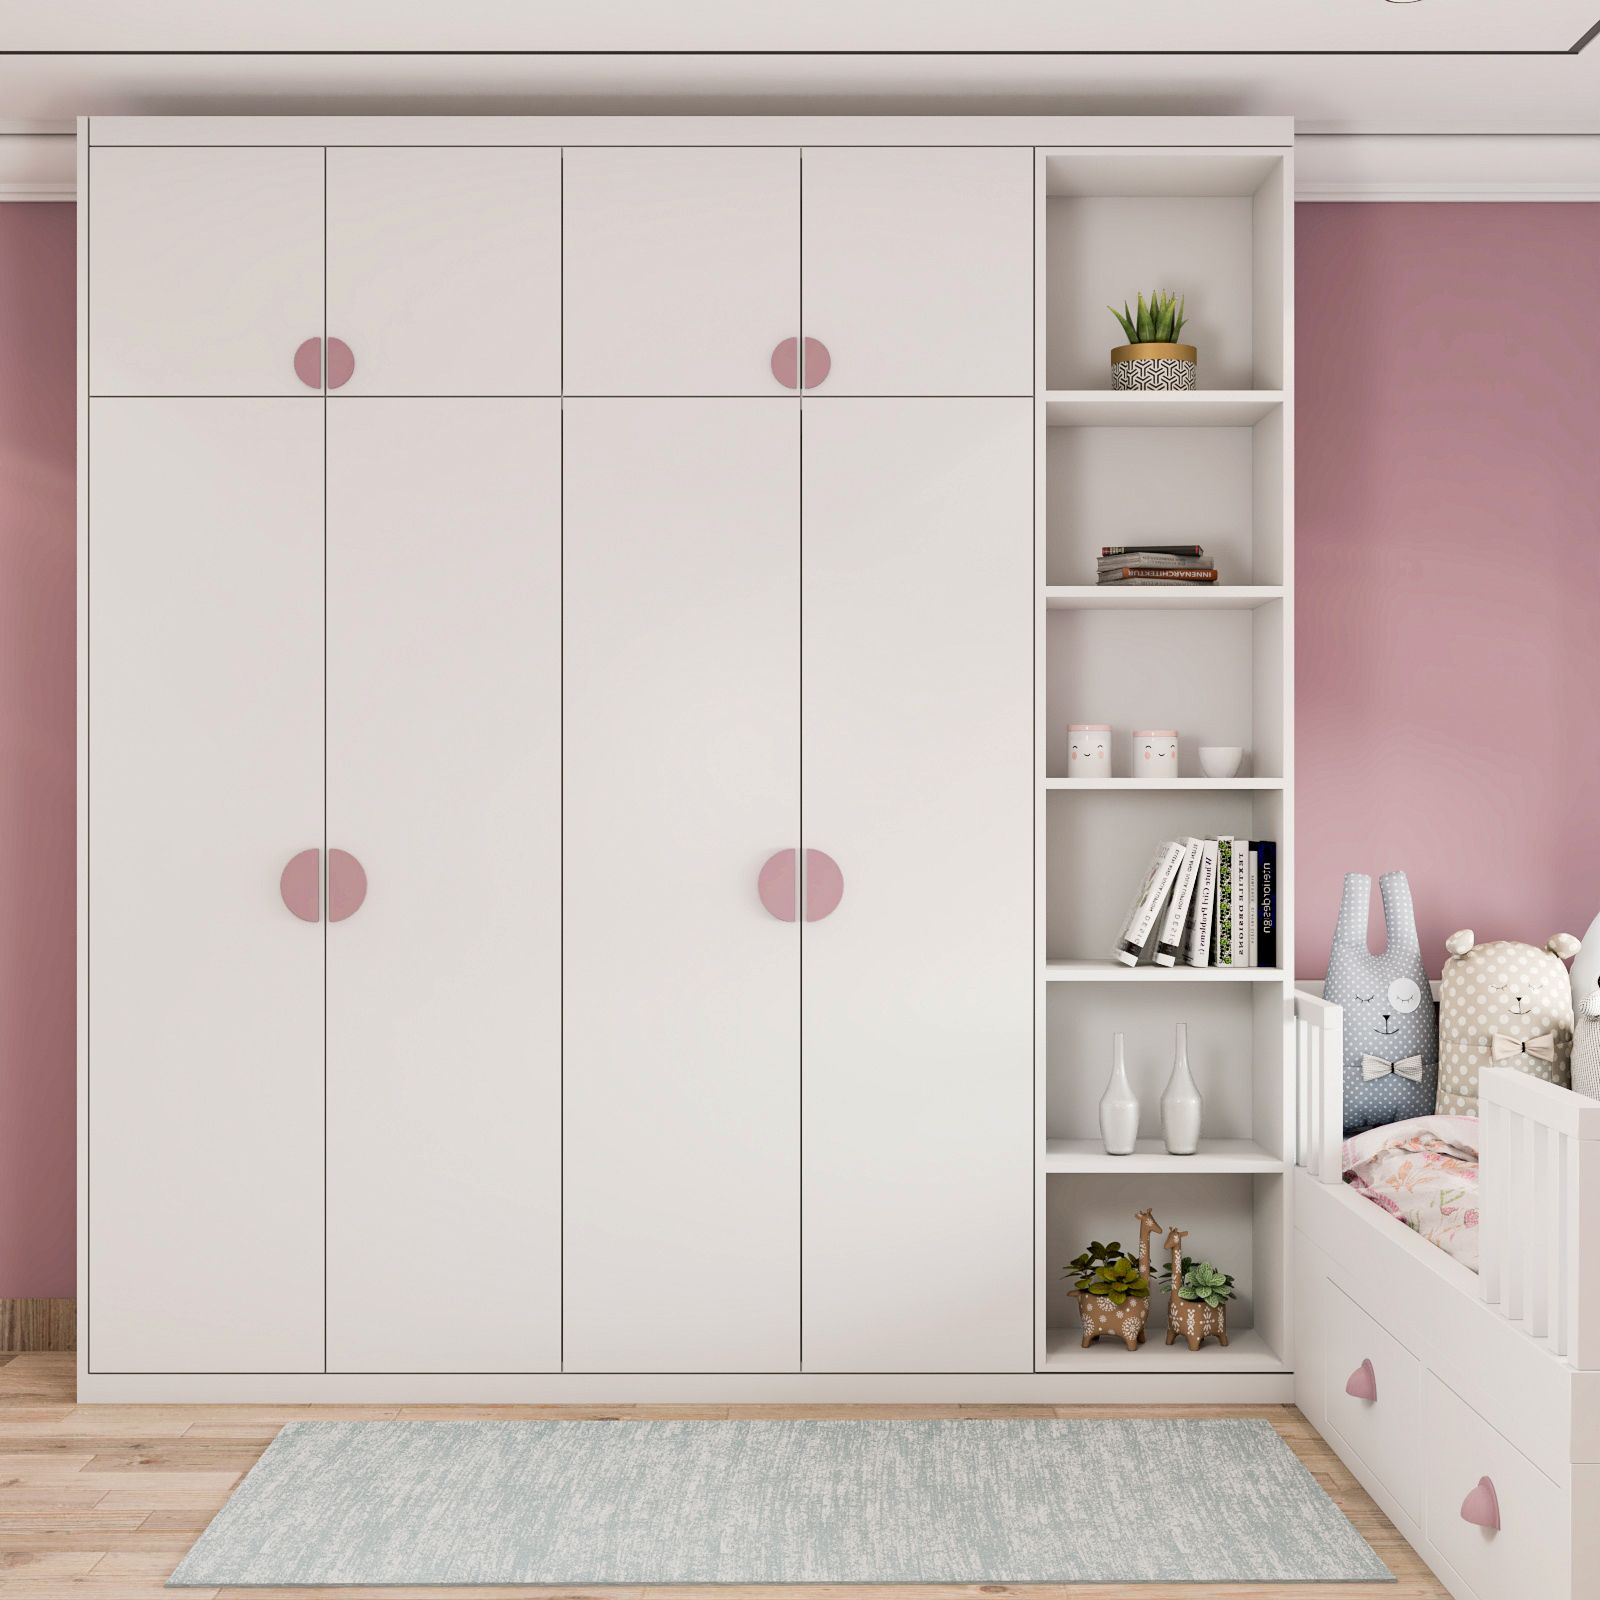 Modern Frosty White 4-Door Swing Wardrobe Design With Pink Handles And Open Storage